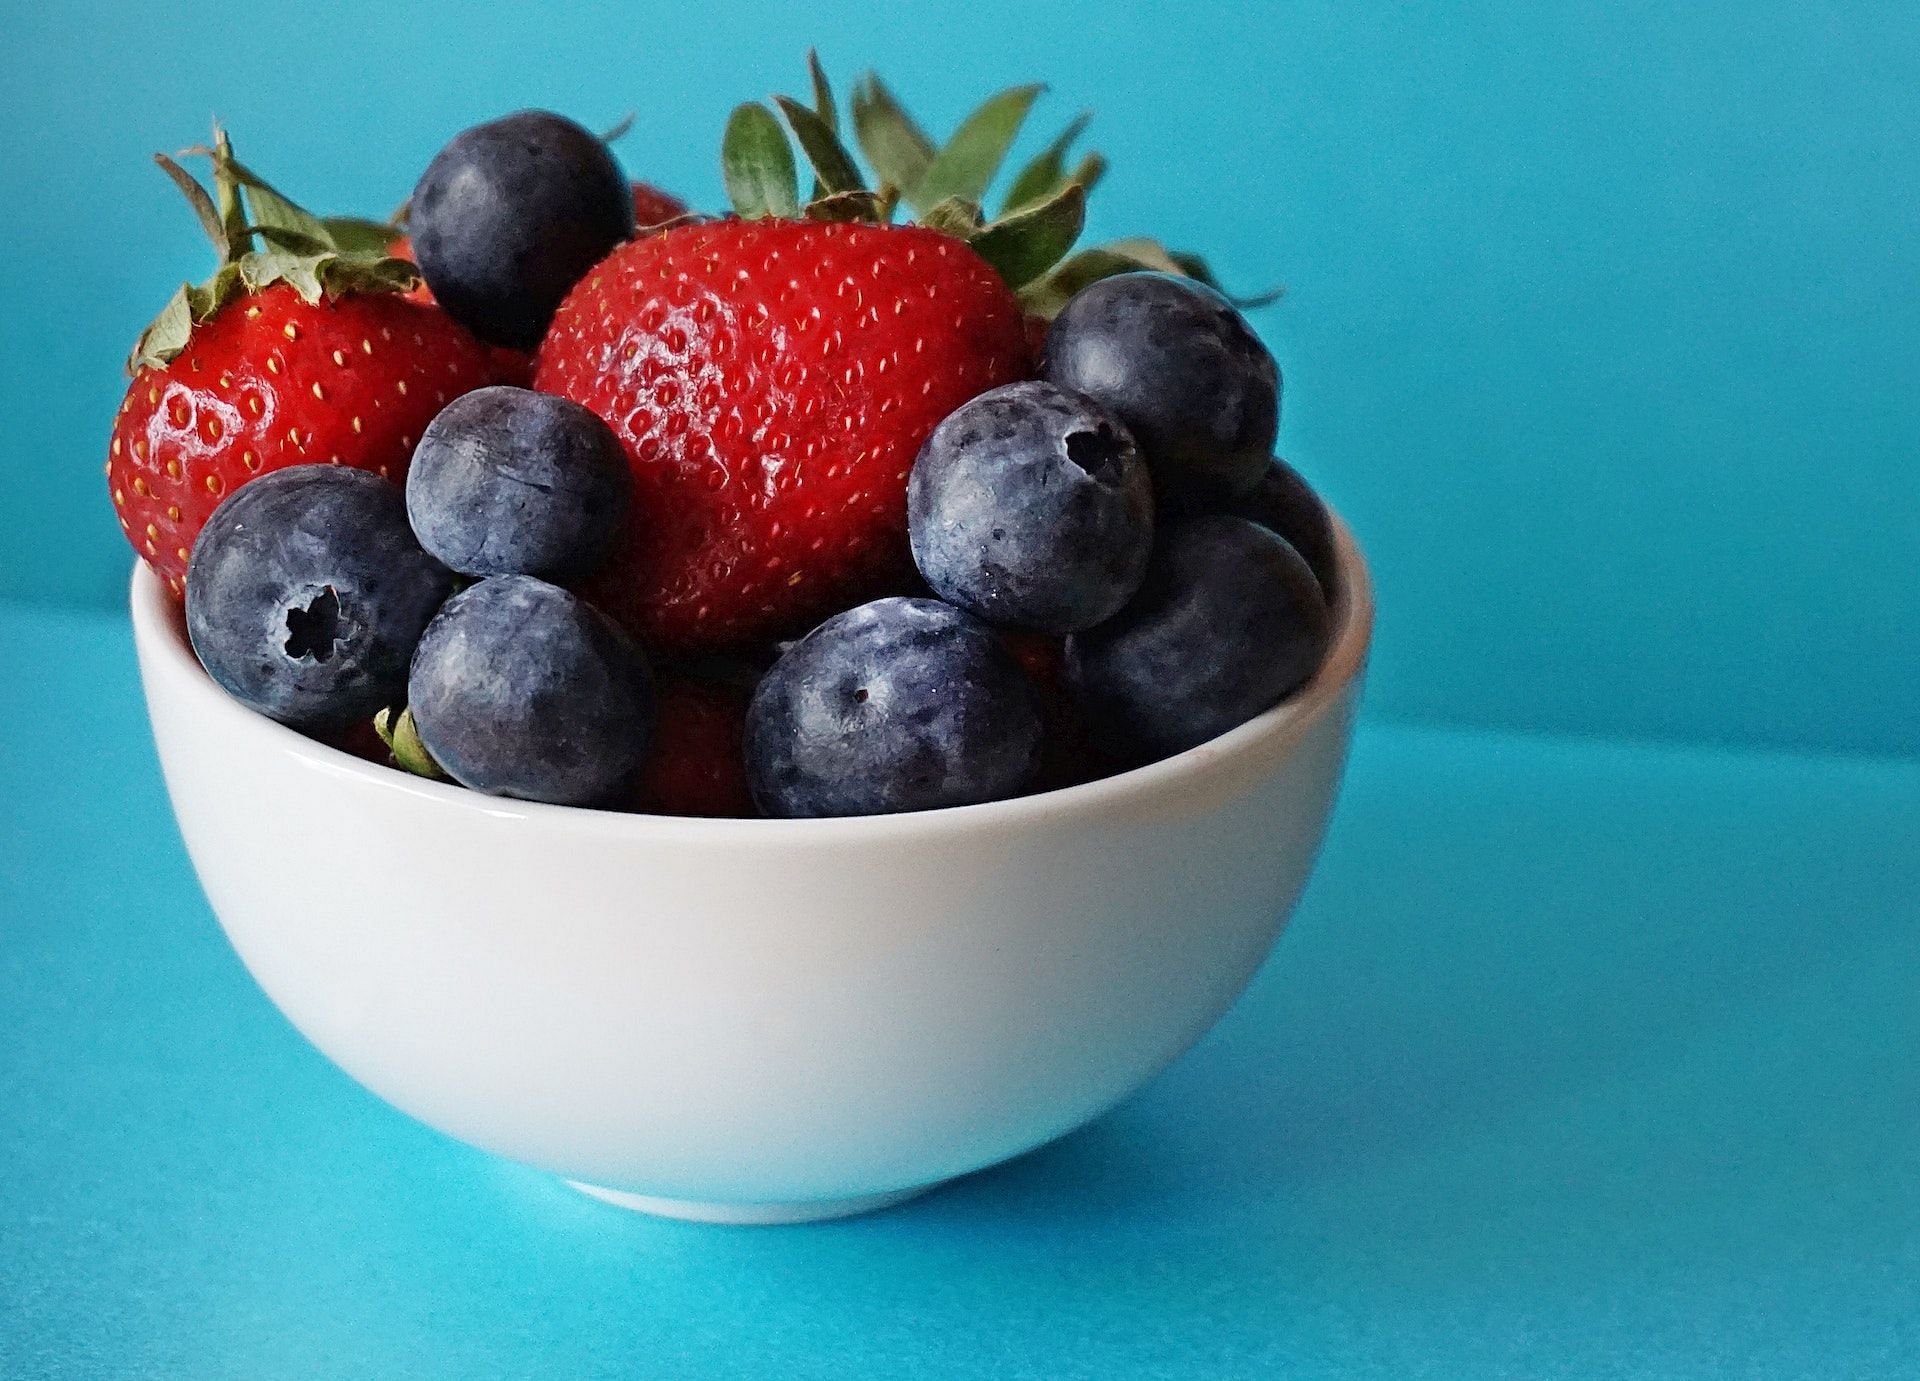 Berries are a good source of antioxidants. (Photo via Pexels/Suzy Hazelwood)